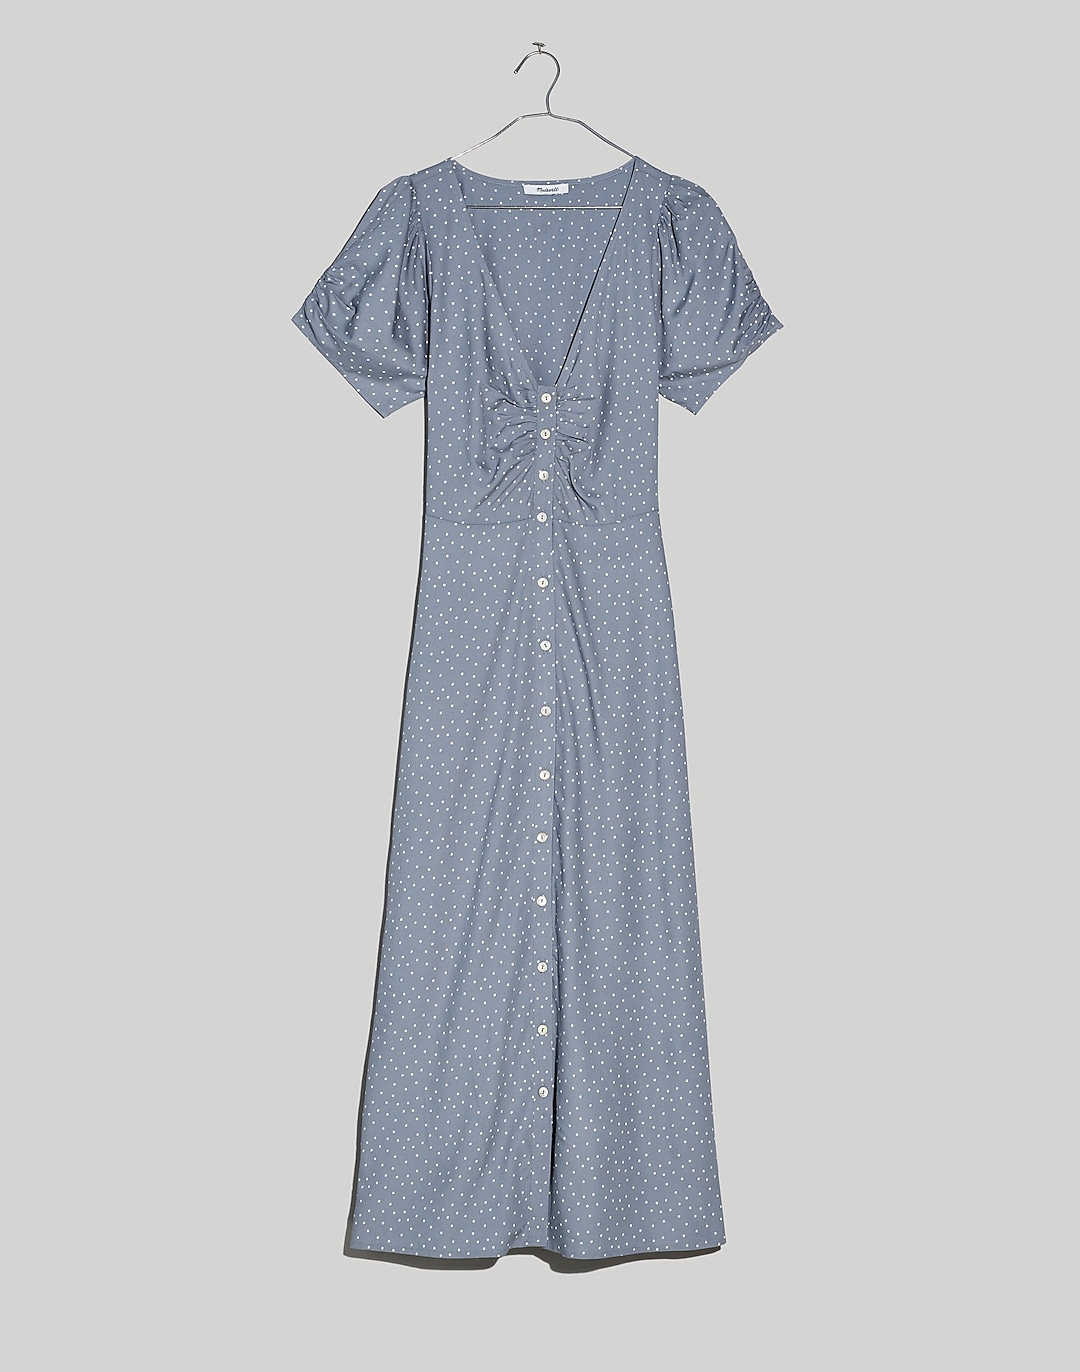 Leedra Button-Front Midi Dress in Dot | Madewell